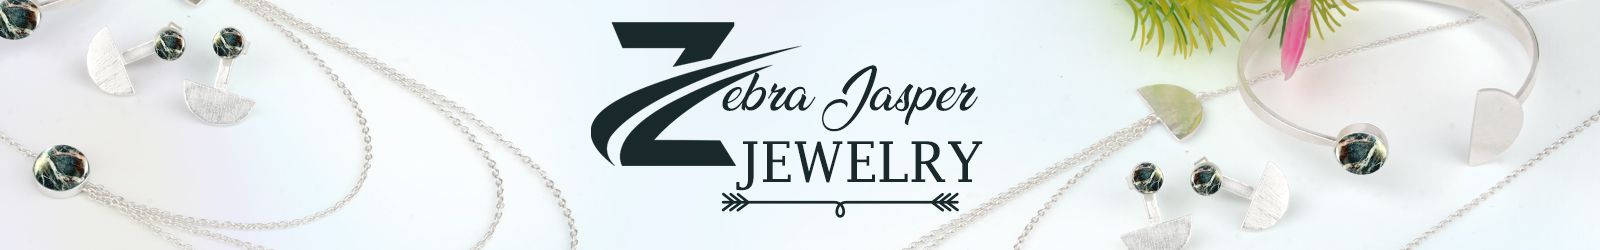 Silver Zebra Jasper Jewelry Wholesale Supplier